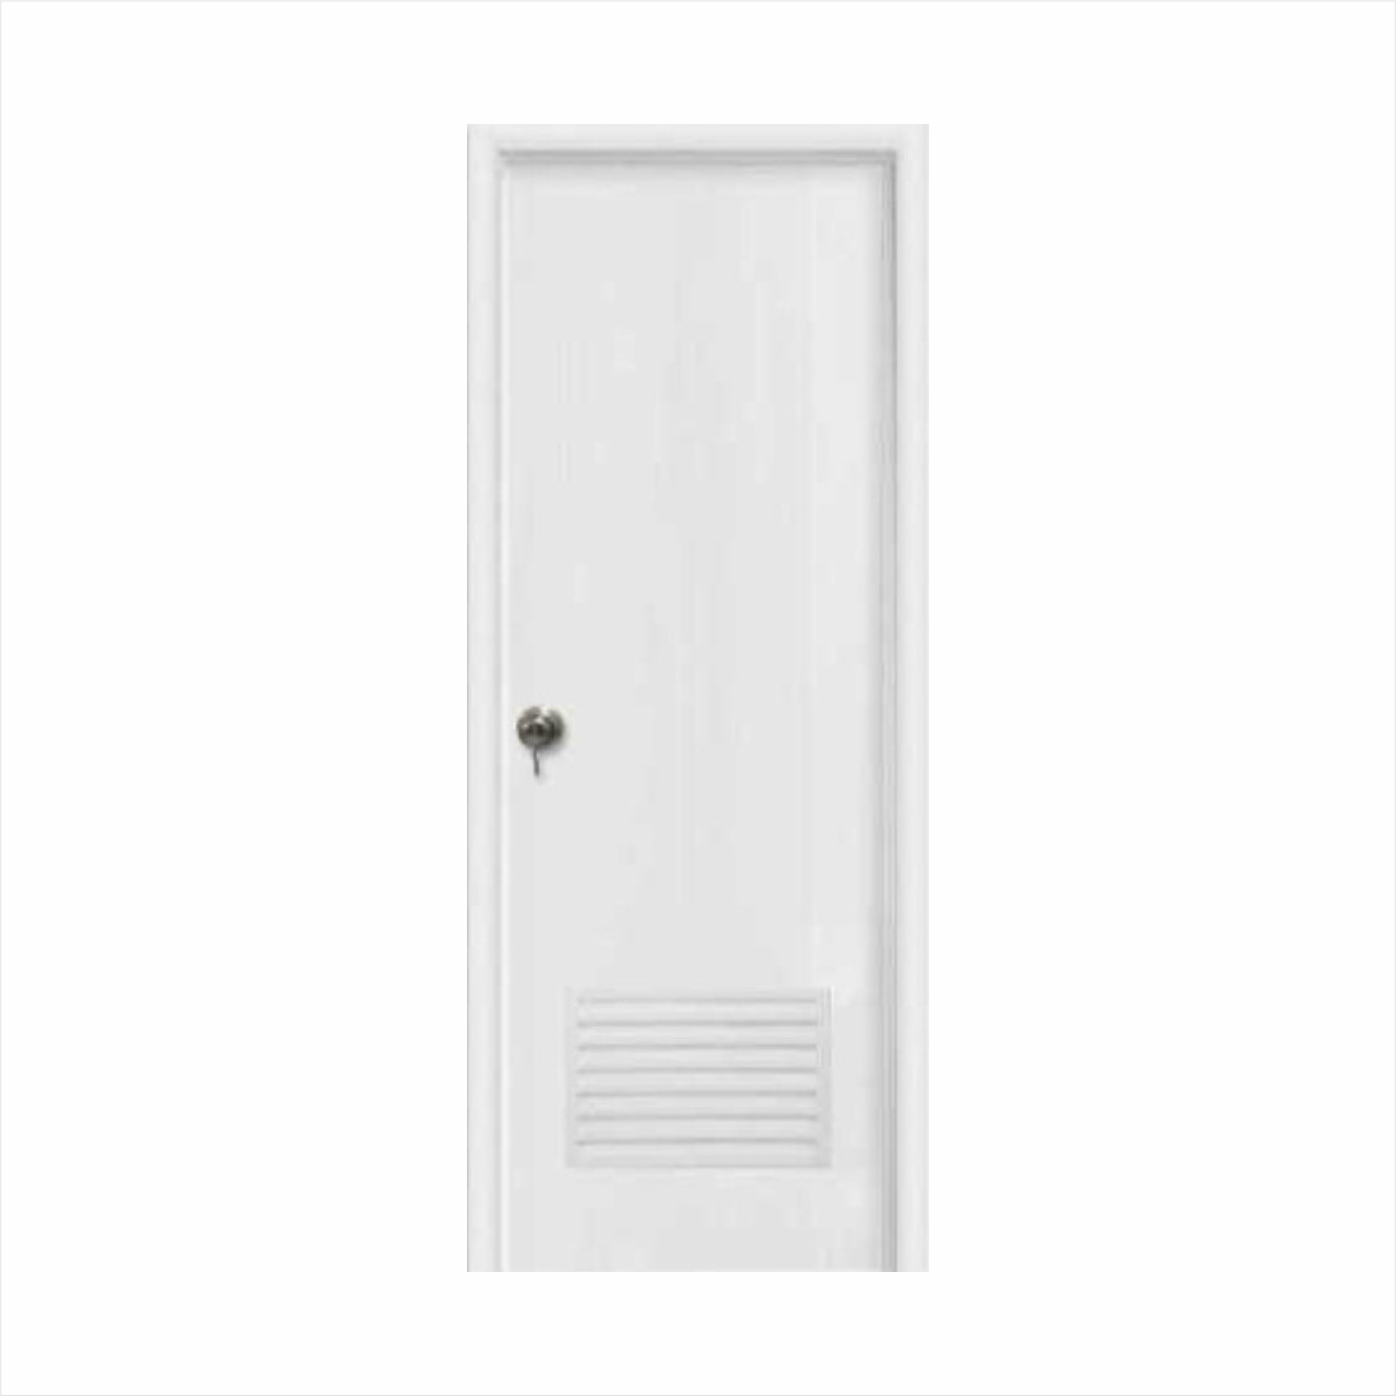 Pintu Kamar Mandi PVC MASTERQ Putih 70x200 Cm Buka Kanan Kiri